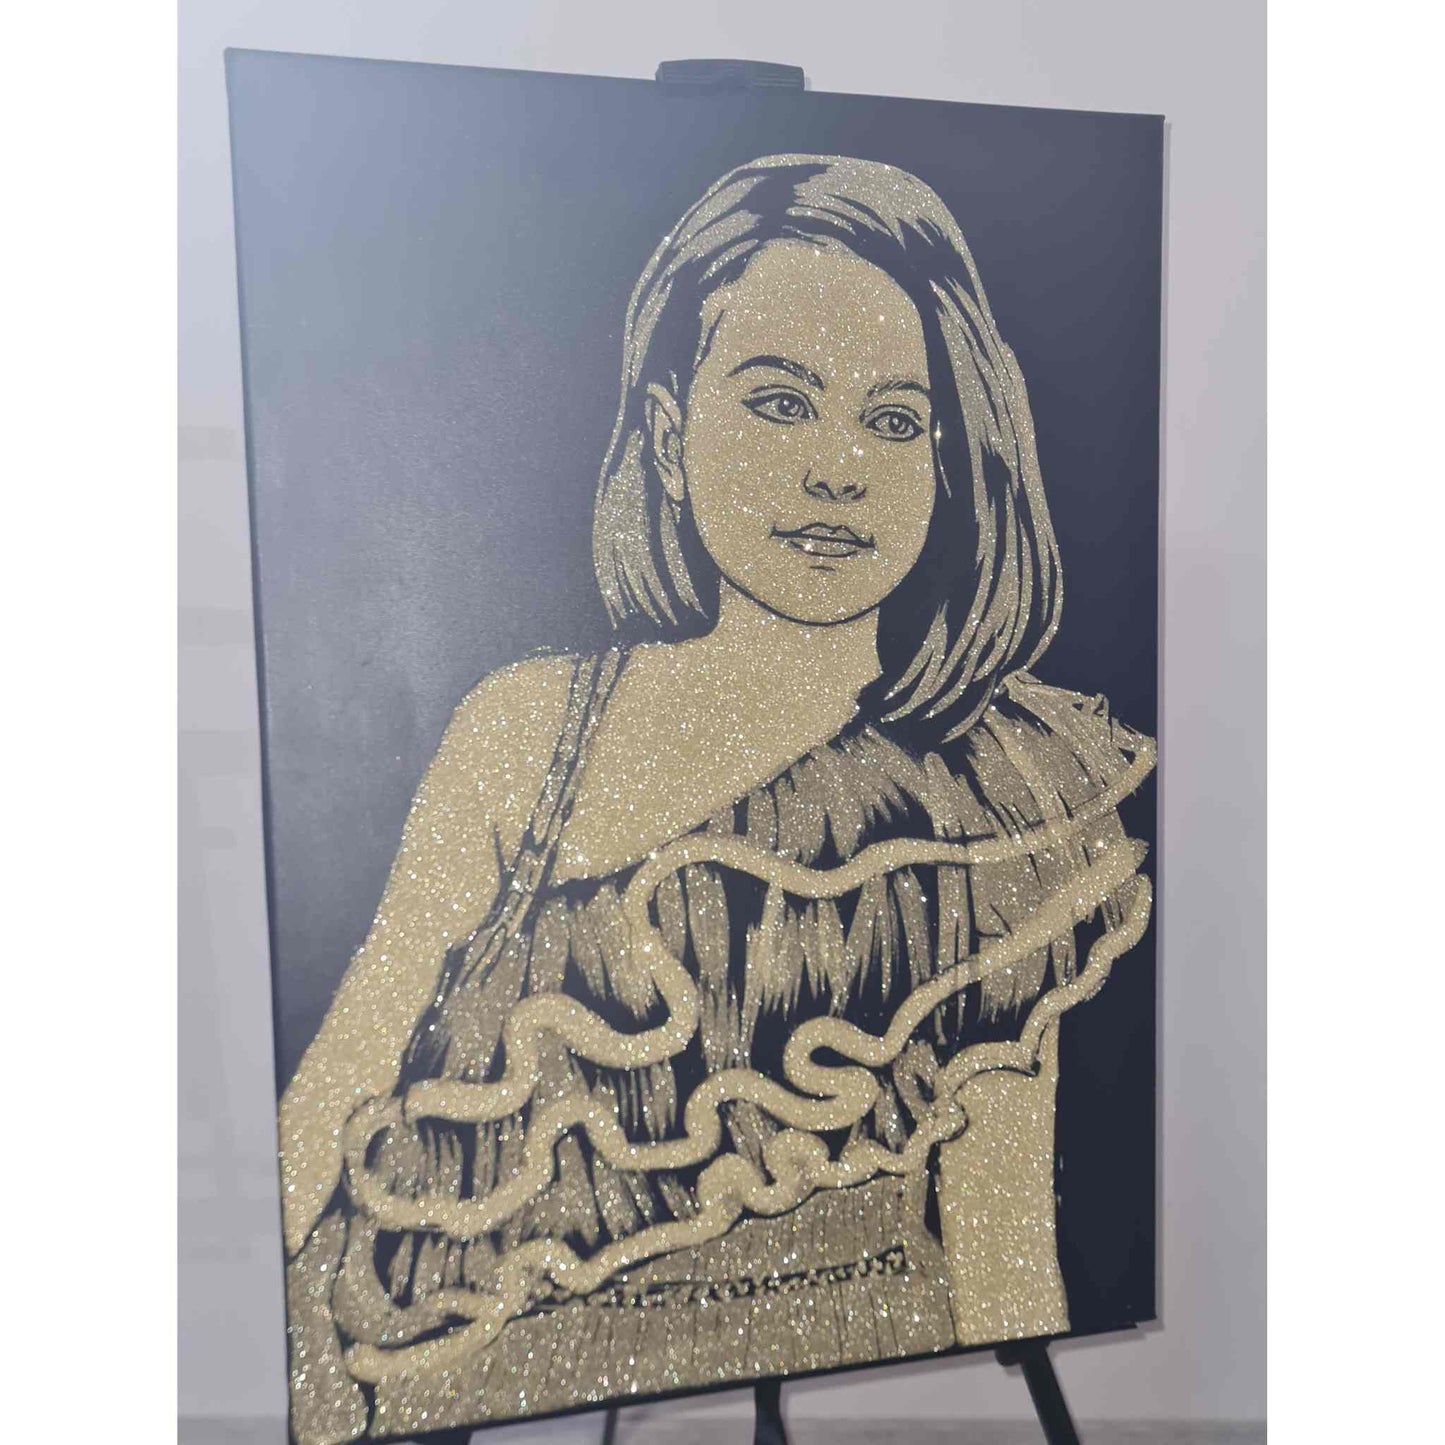 Portret cu sclipici auriu, personalizat dupa poza nasei, pictat manual, pe panza canvas de 50x70 cm.